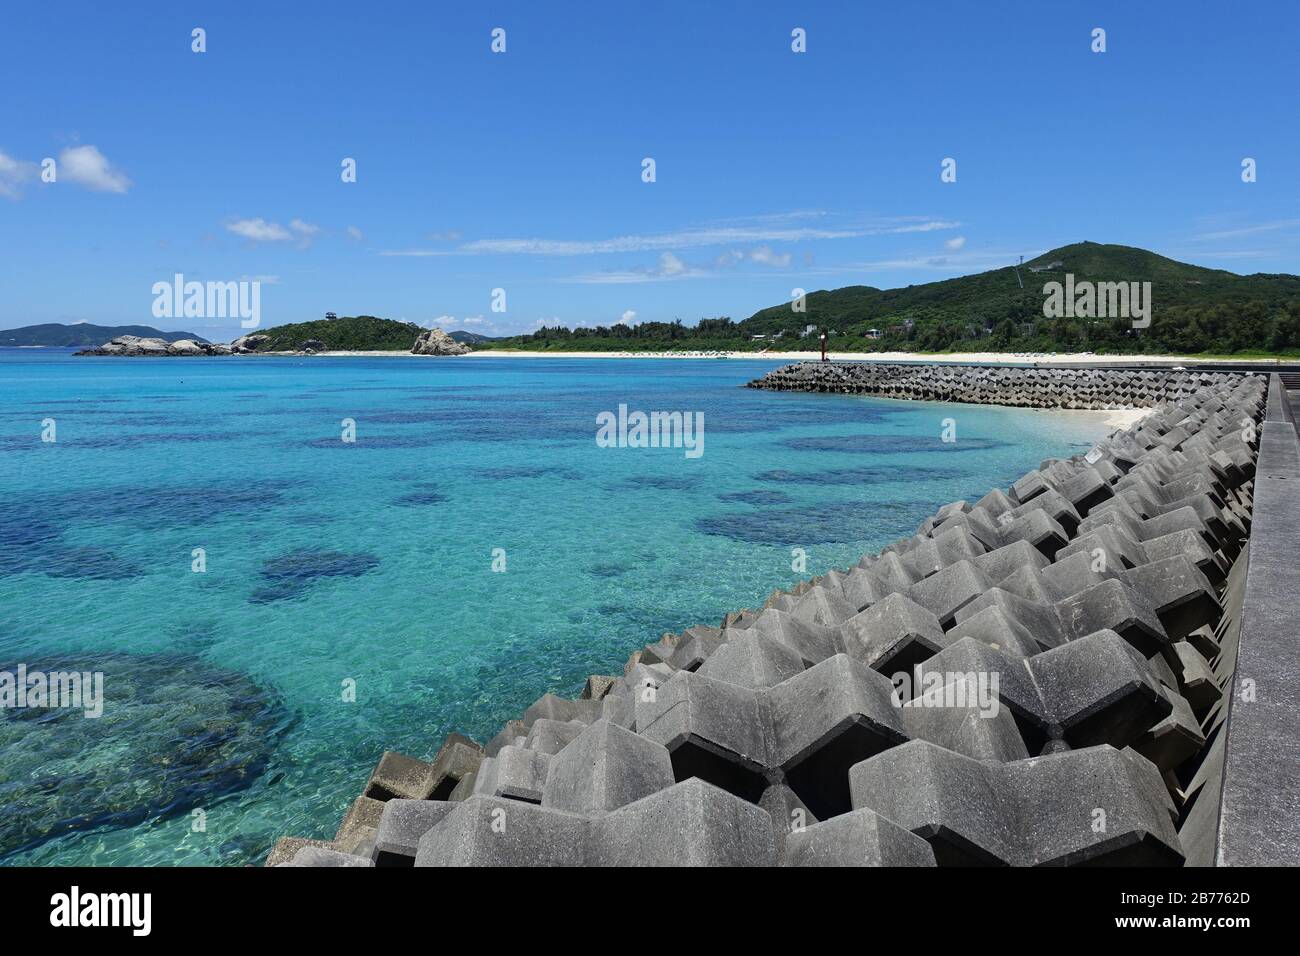 Okinawa Japan - Tokashiki Island Aharen Schutzwall Marina Stockfoto